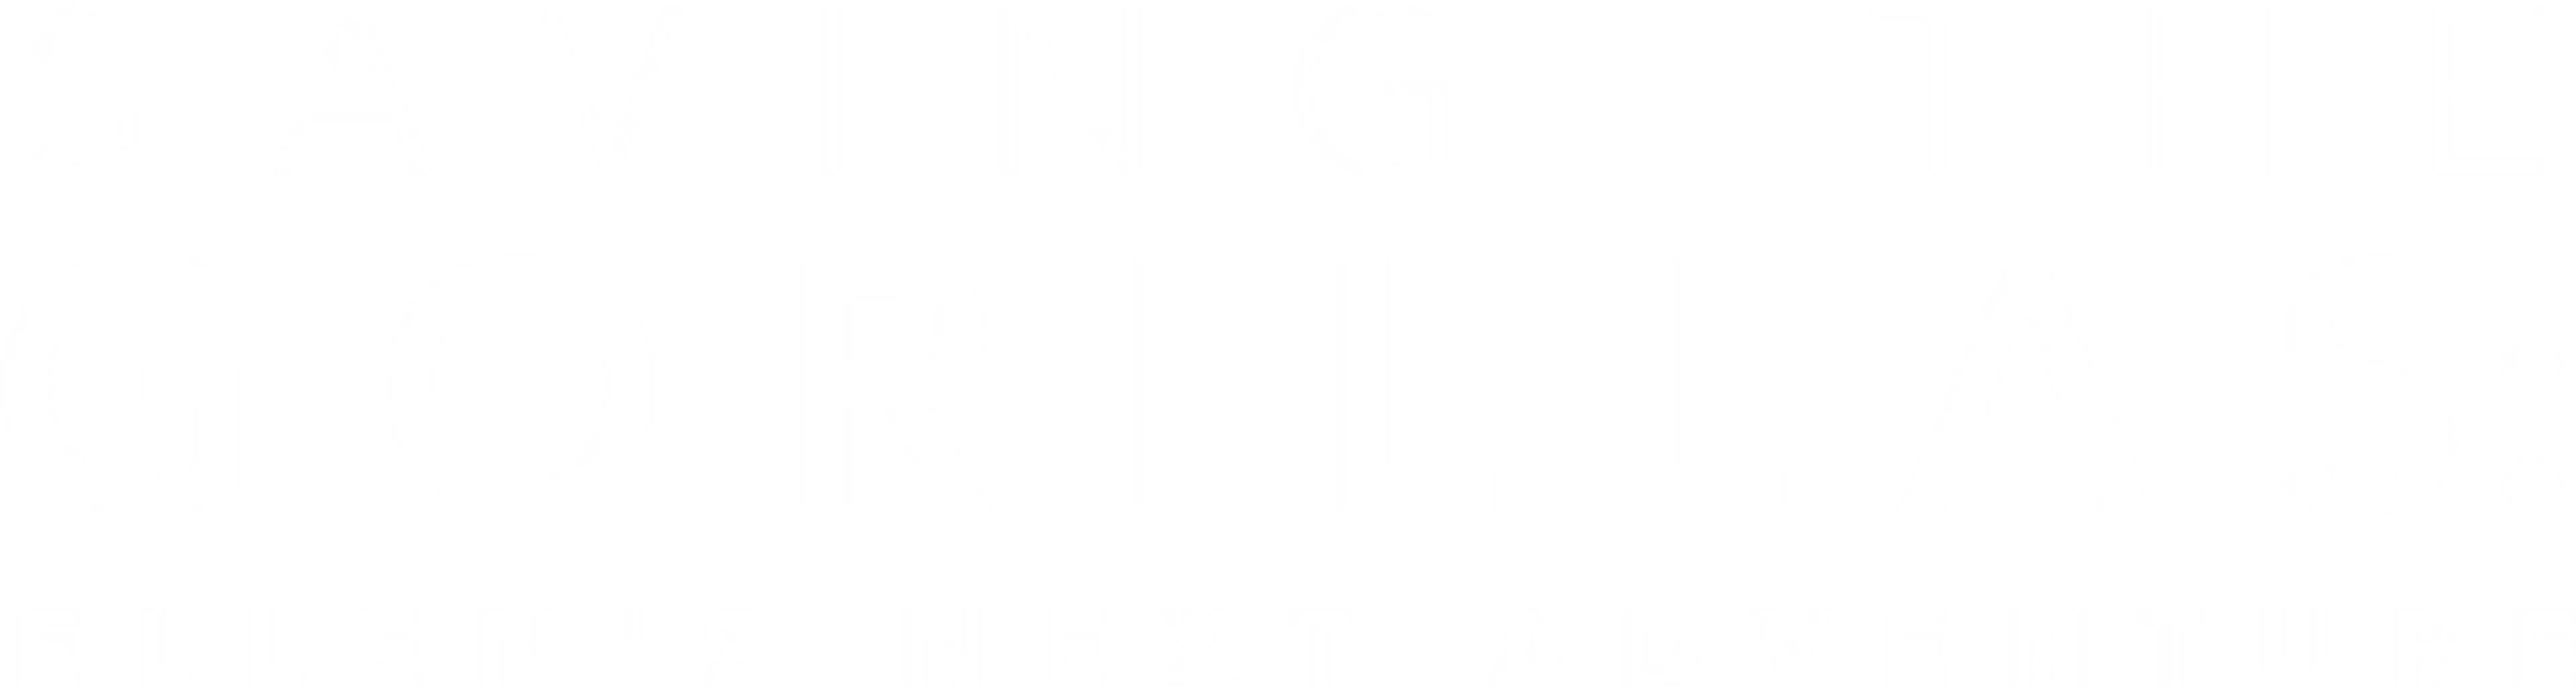 Saving the Gorillas: Ellen's Next Adventure logo